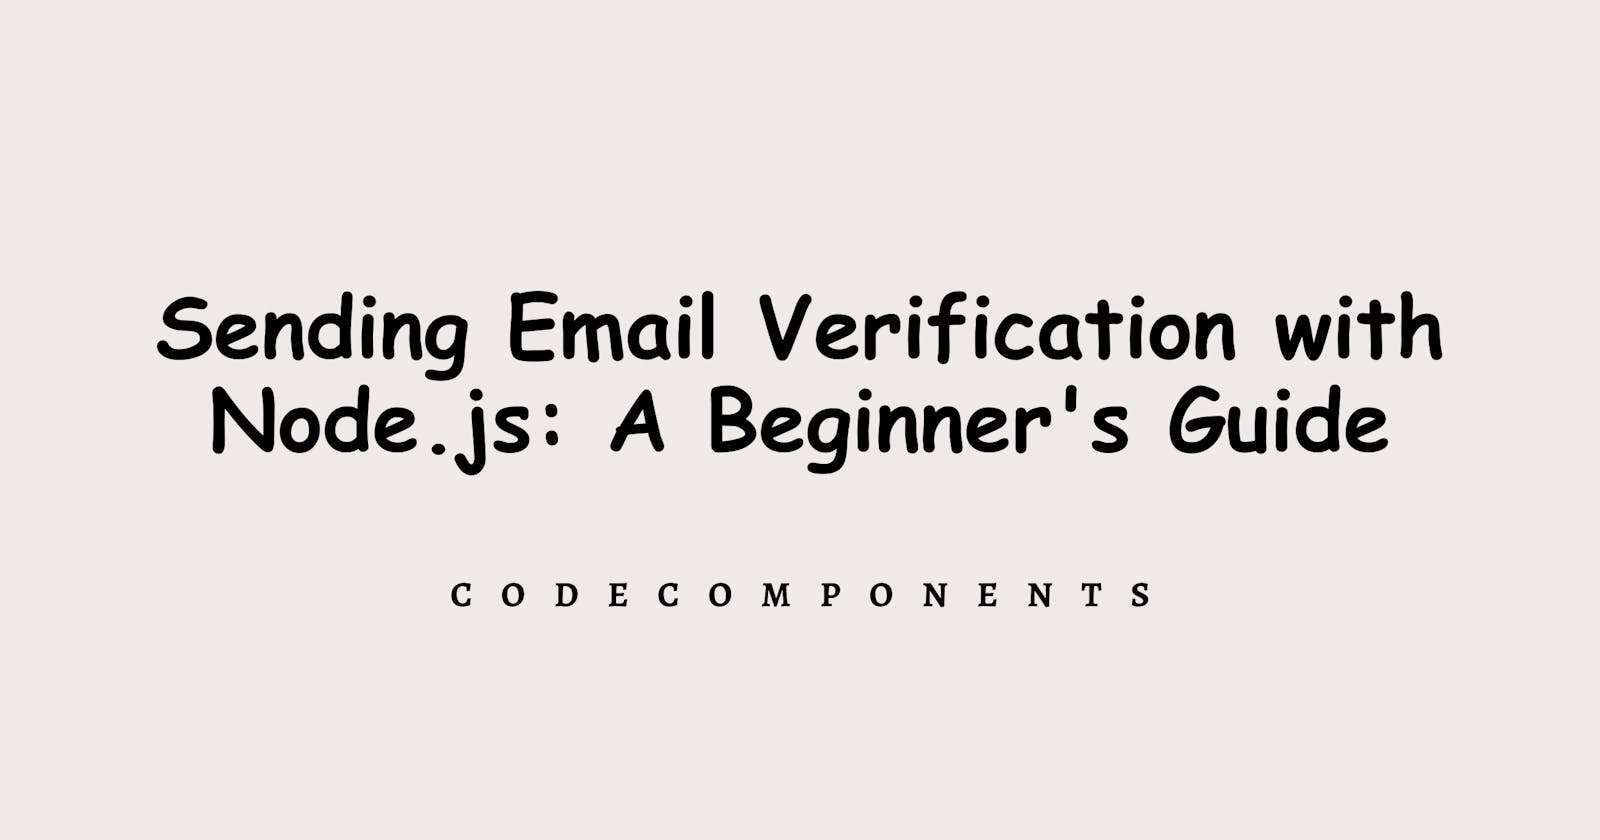 Sending Email Verification with Node.js: A Beginner's Guide